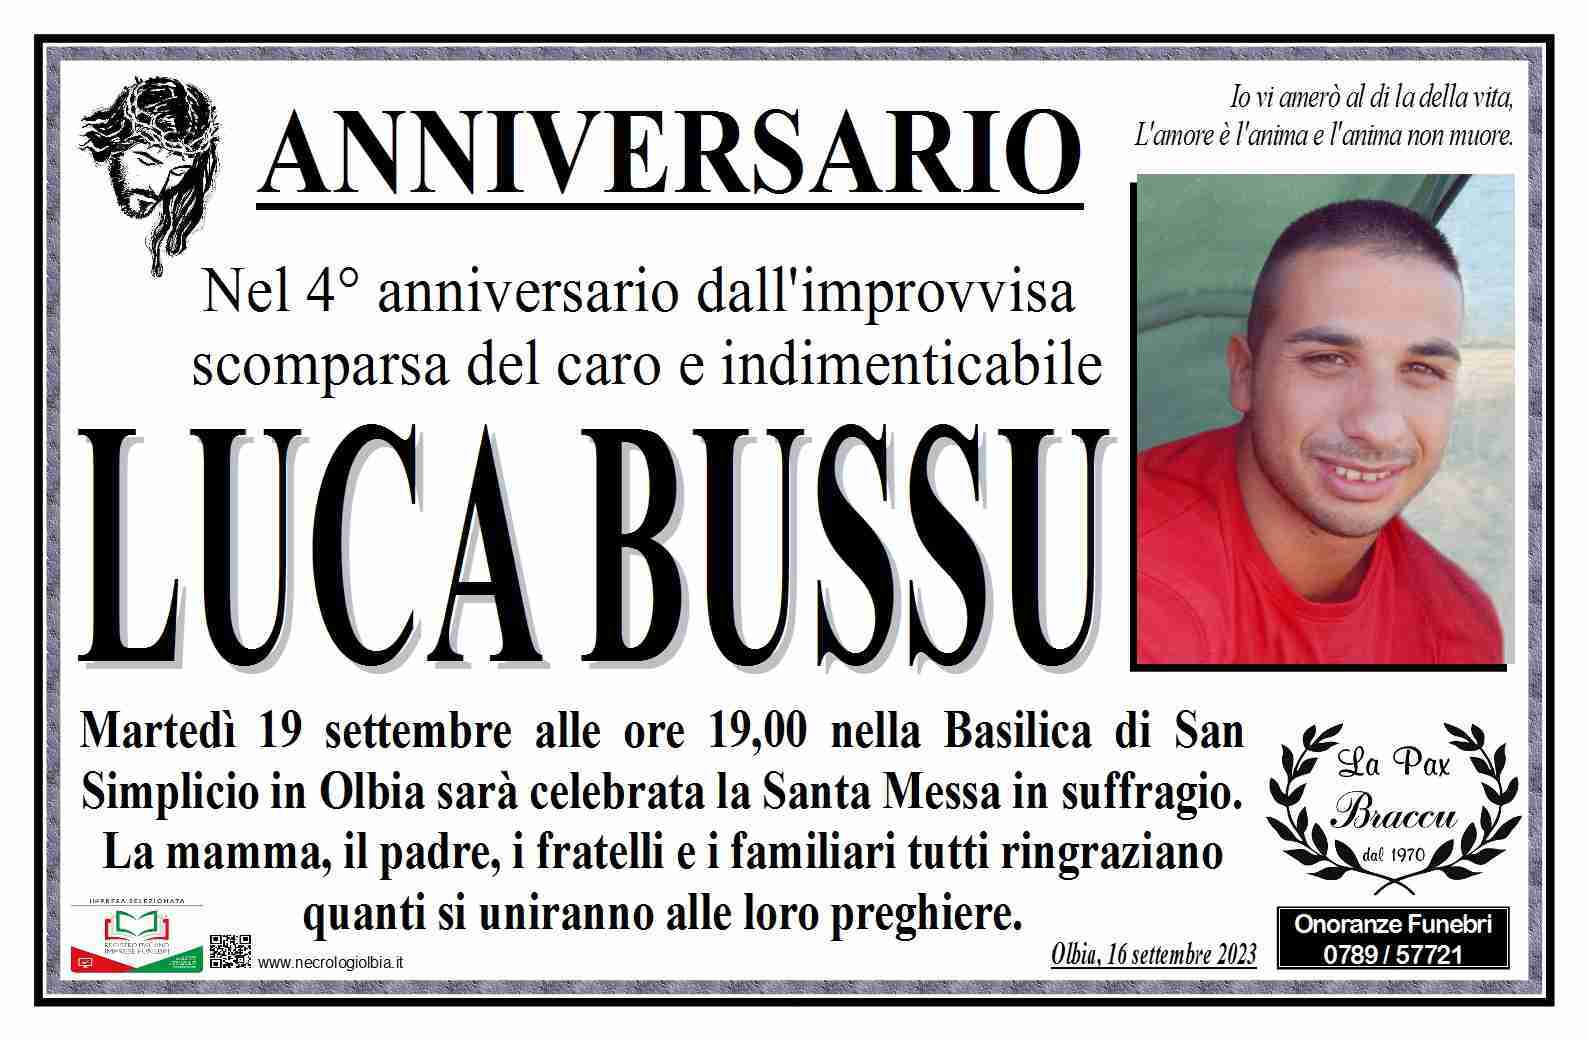 Luca Bussu